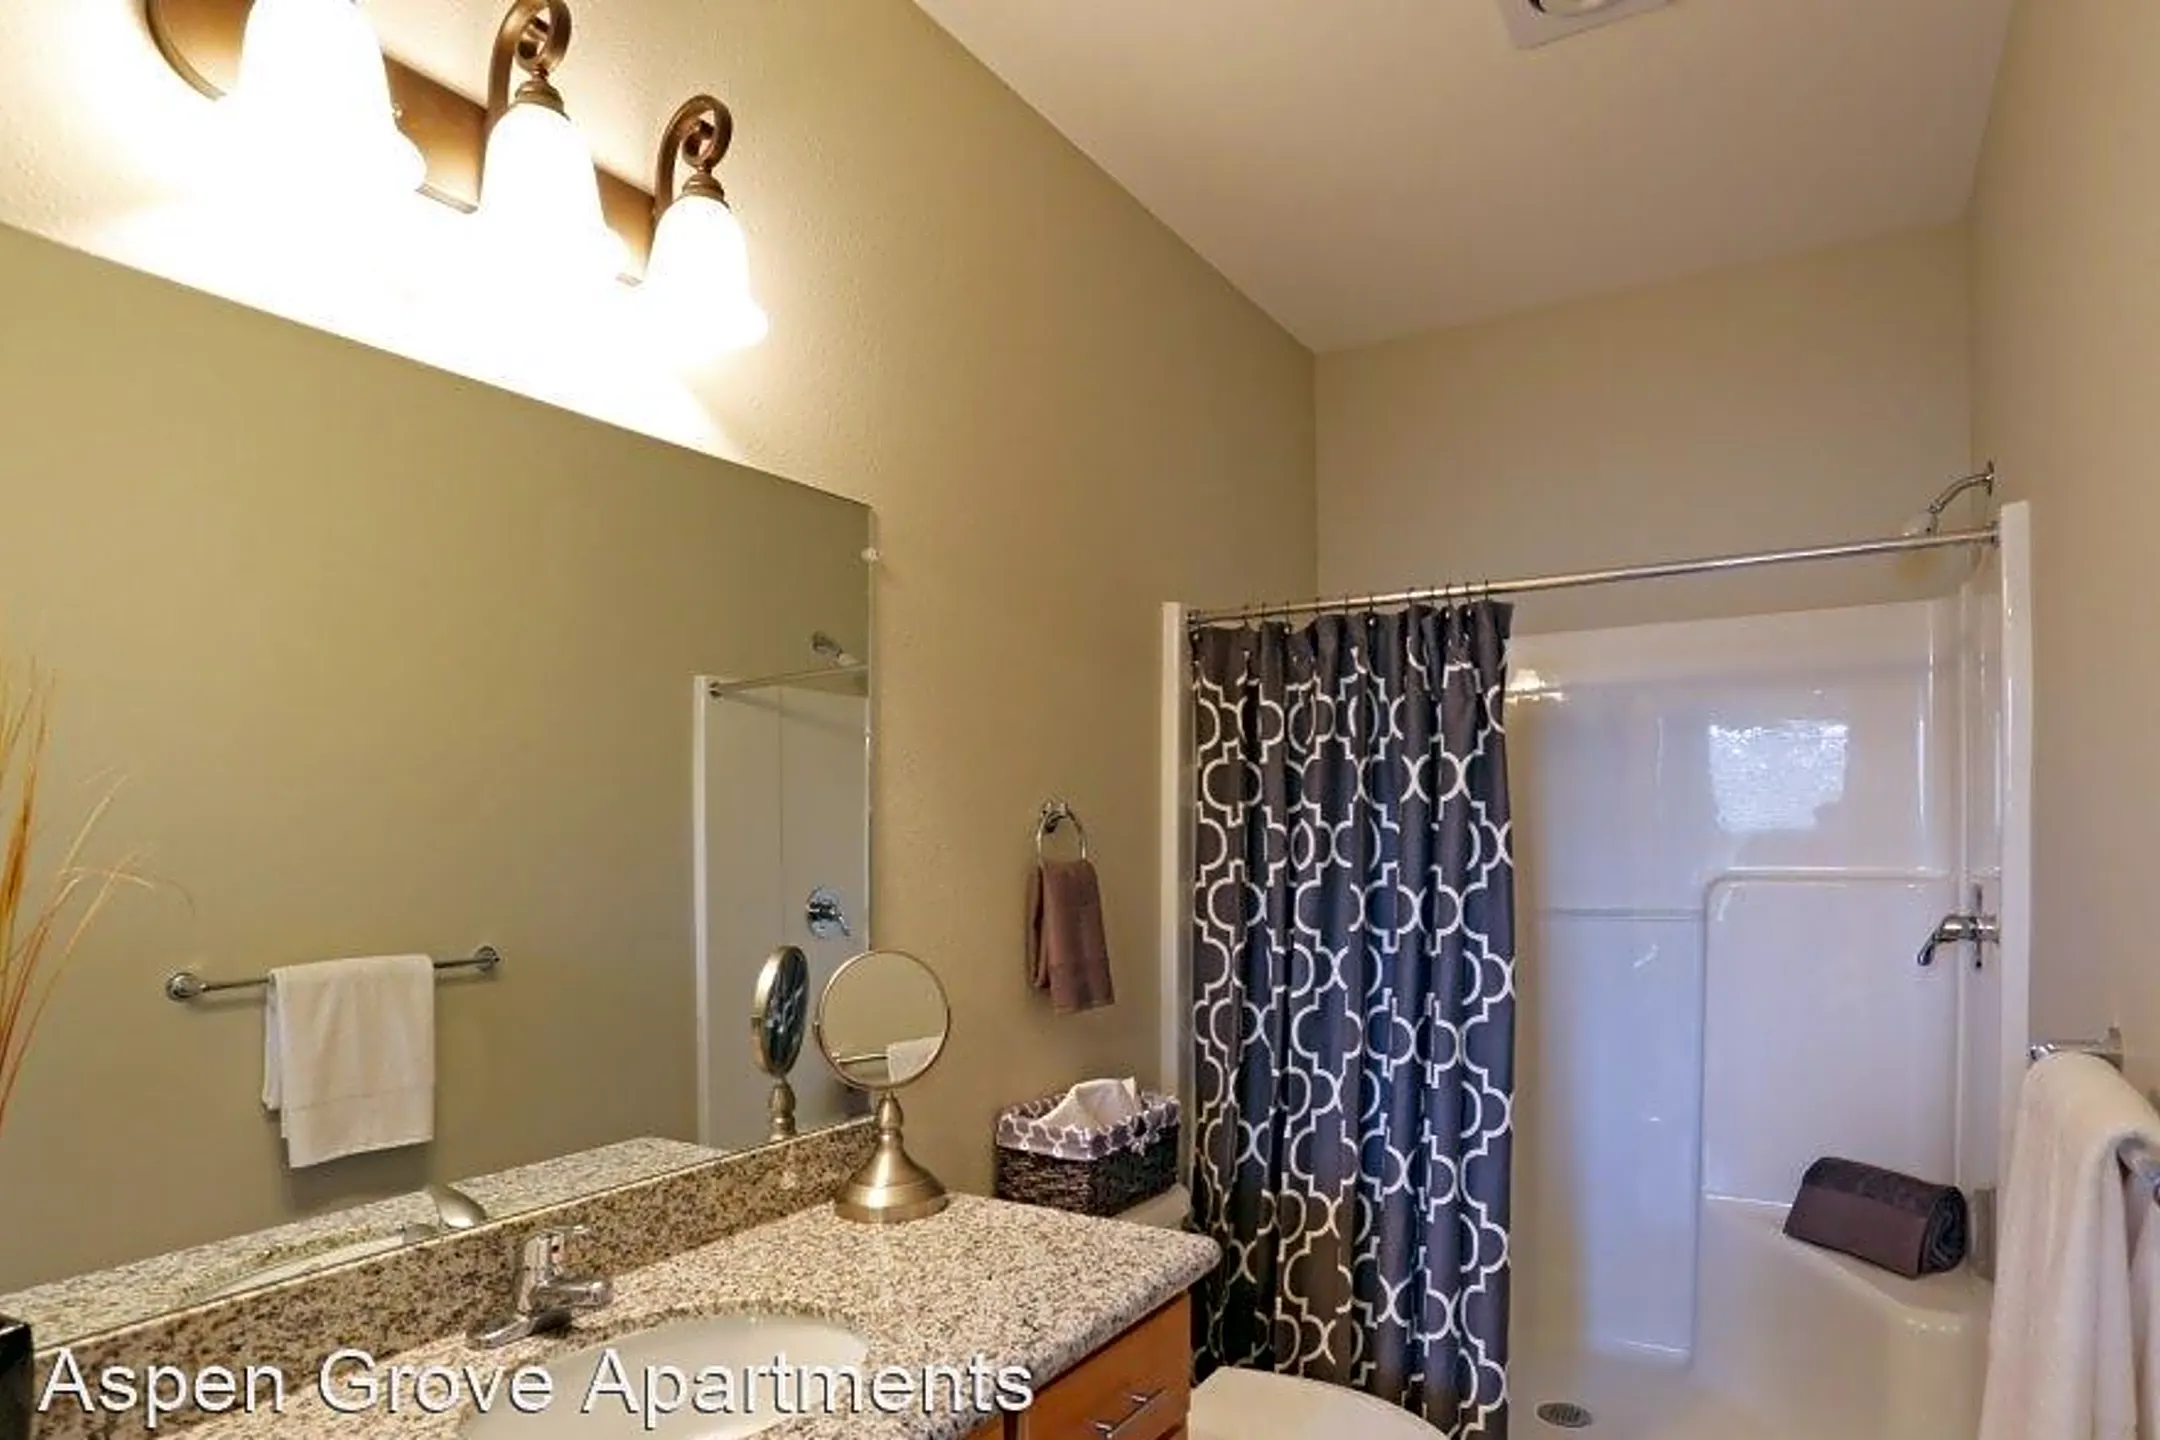 Bathroom - Aspen Grove Apartments - Salem, OR